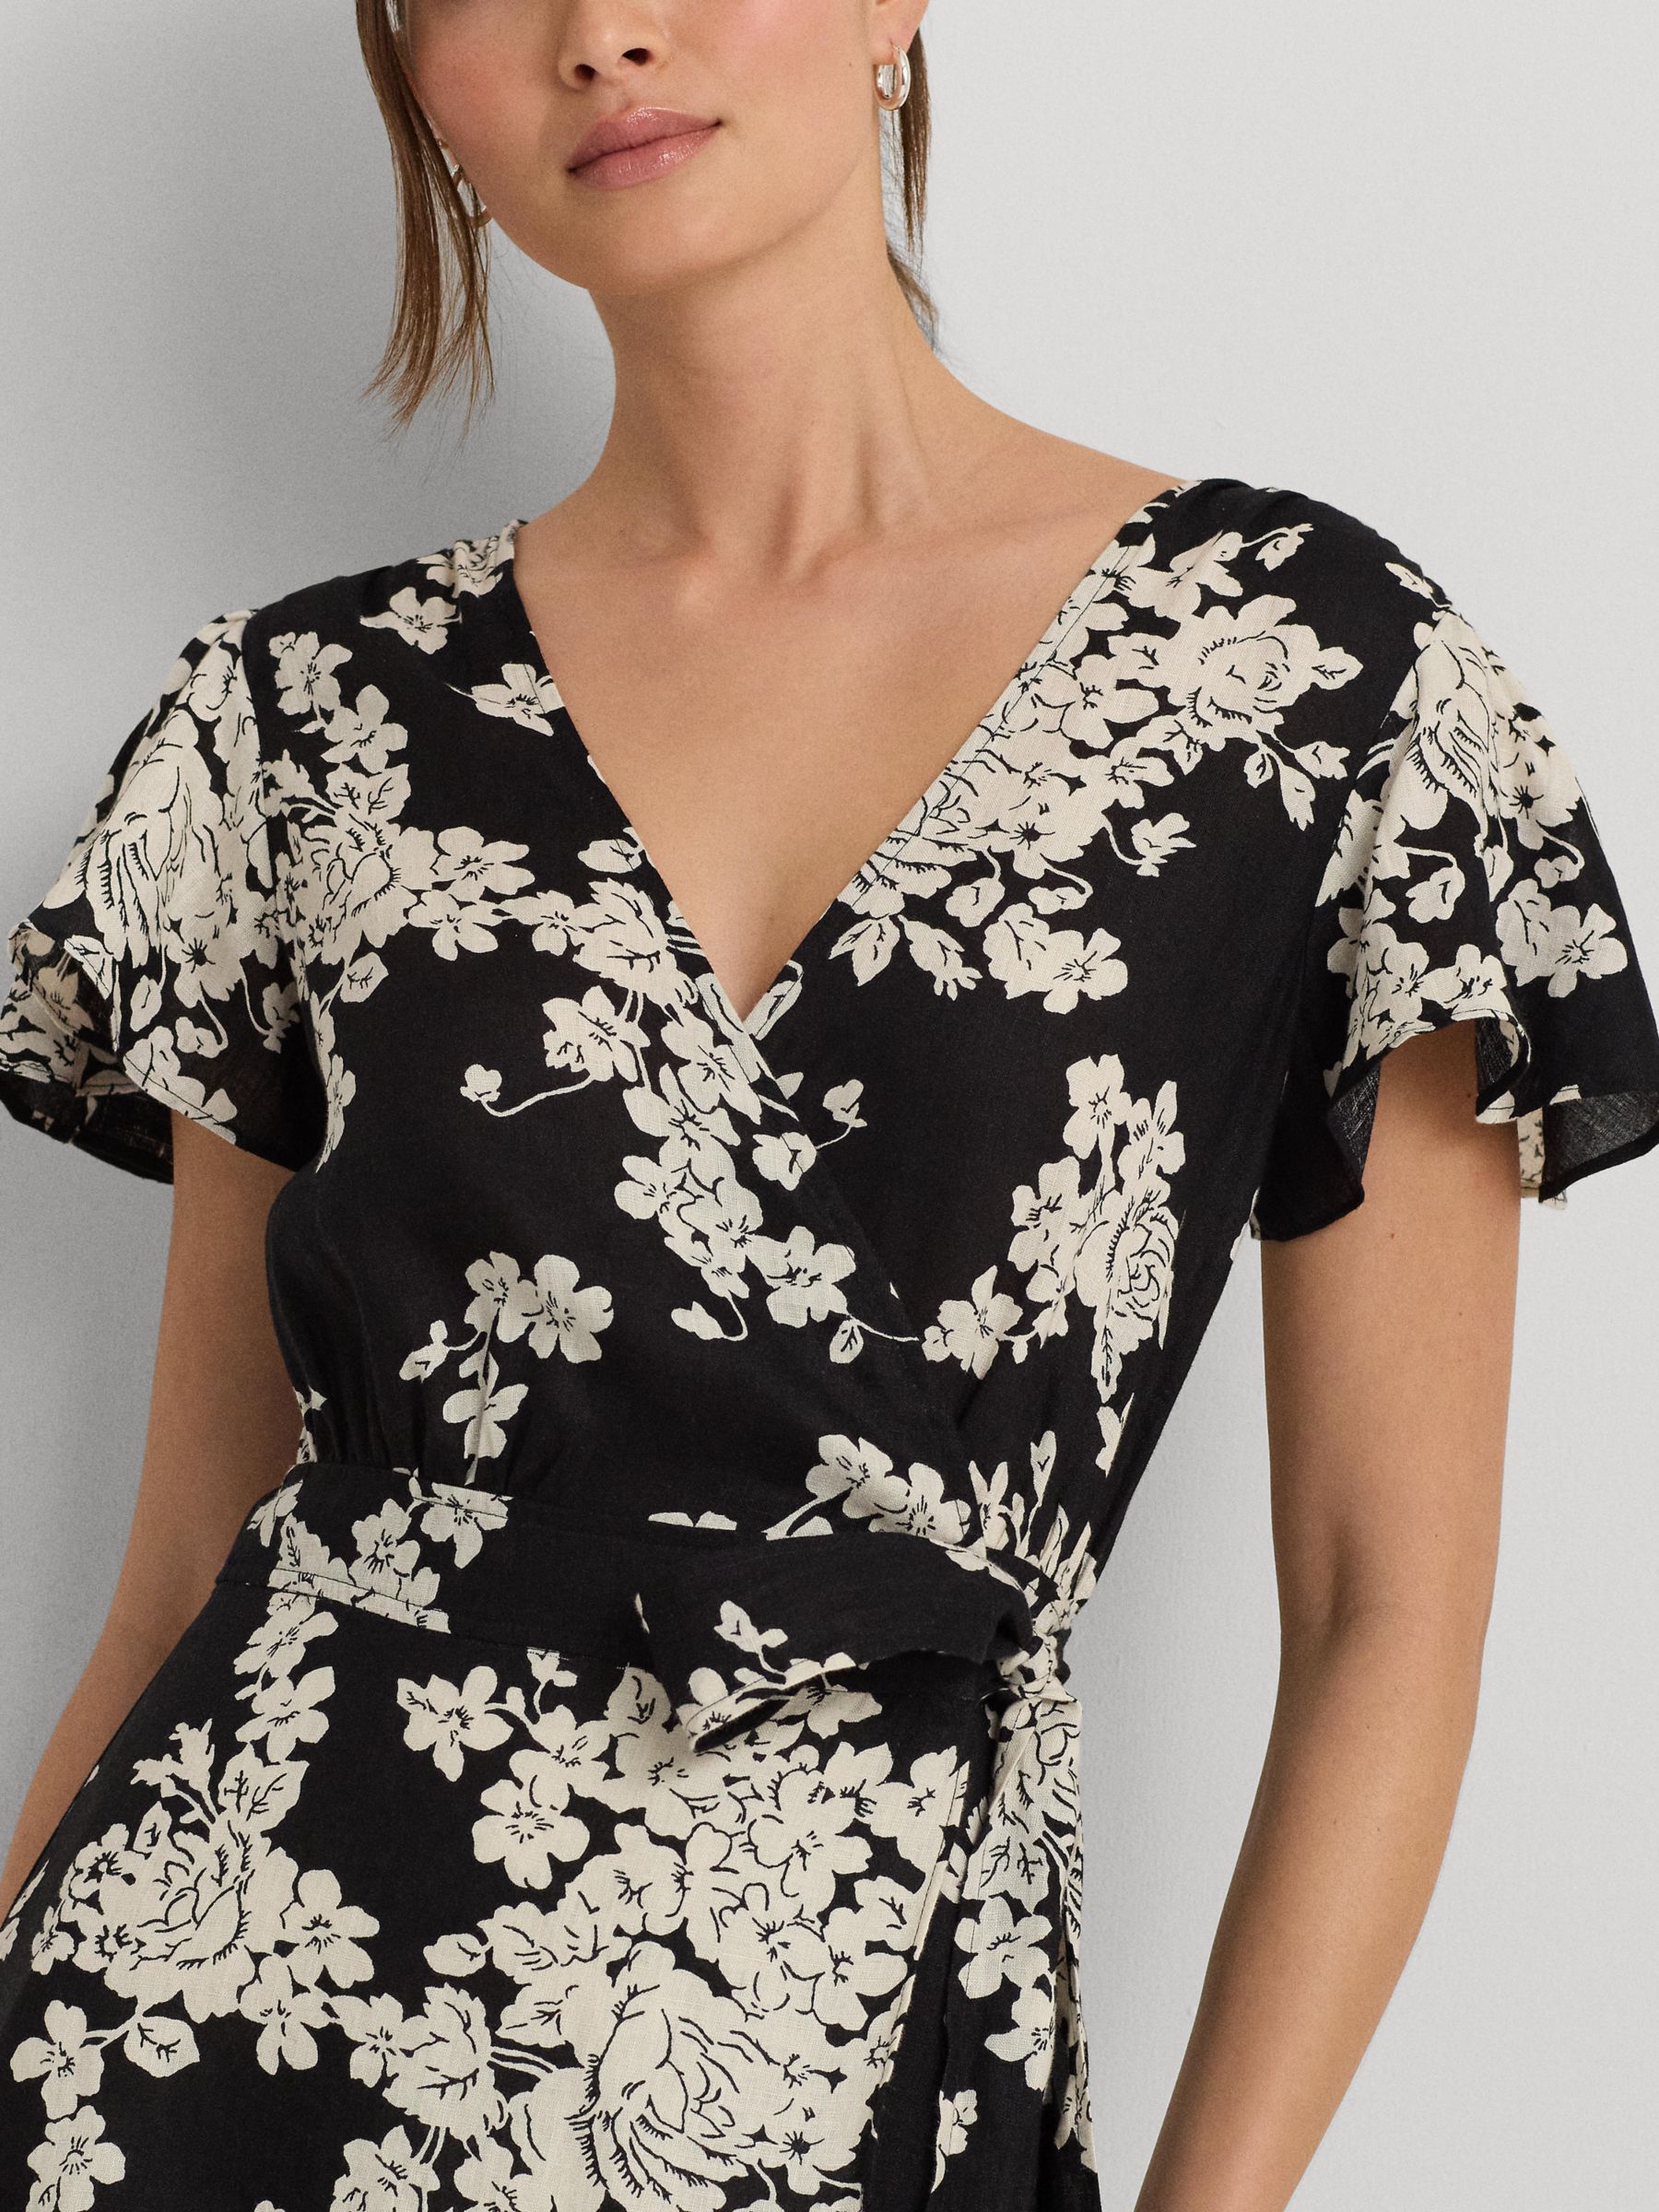 Lauren Ralph Lauren Belforette Rose Print Wrap Dress, Black/Multi, 10